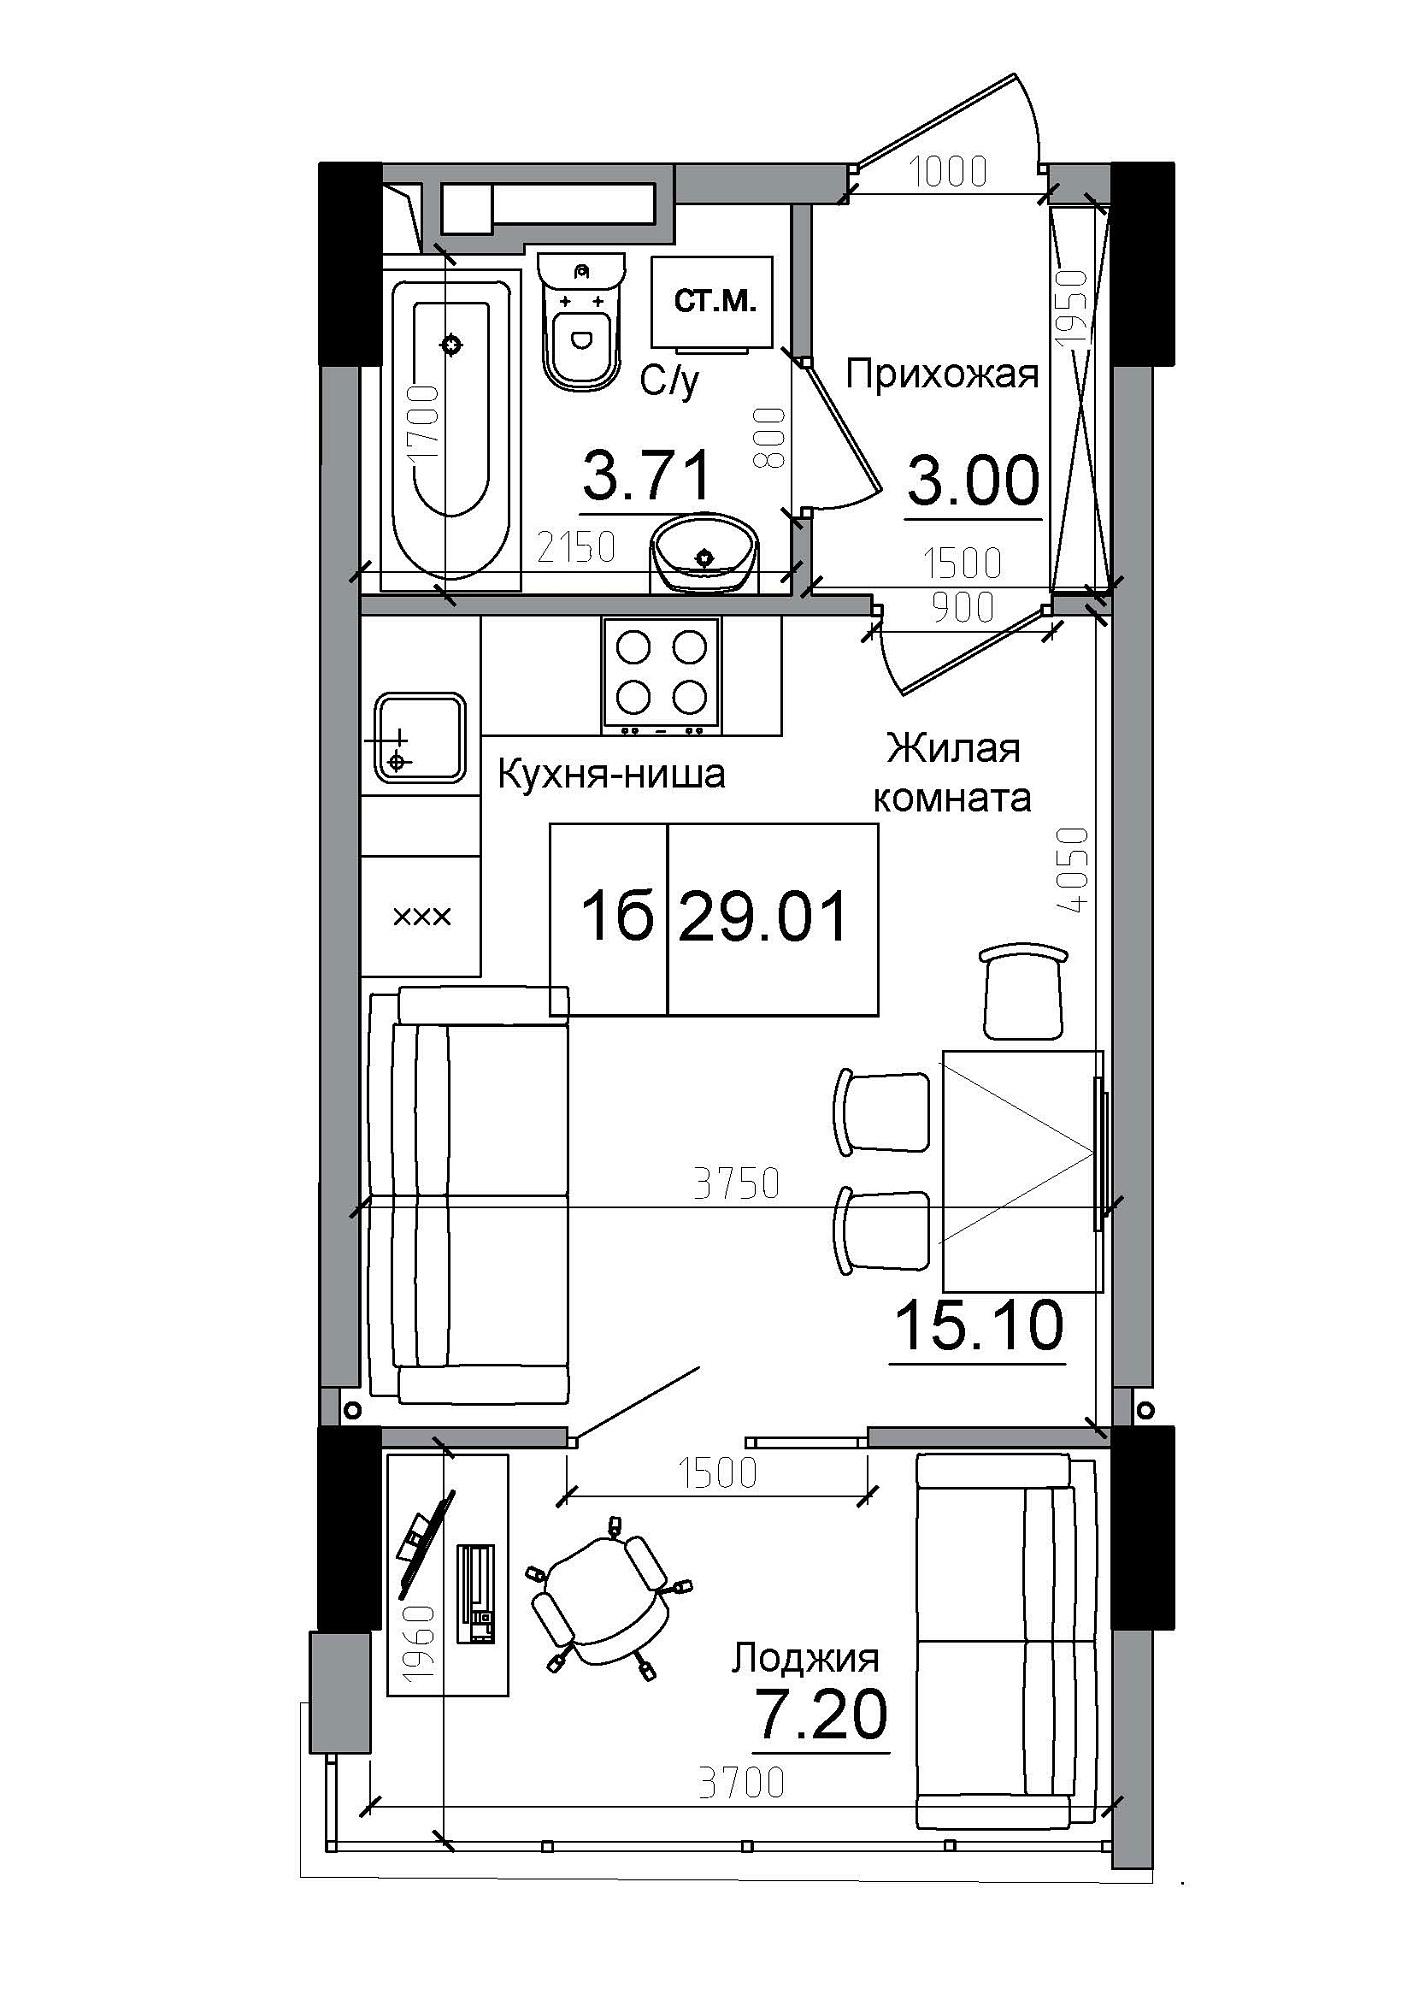 Planning Smart flats area 29.01m2, AB-12-11/00002.